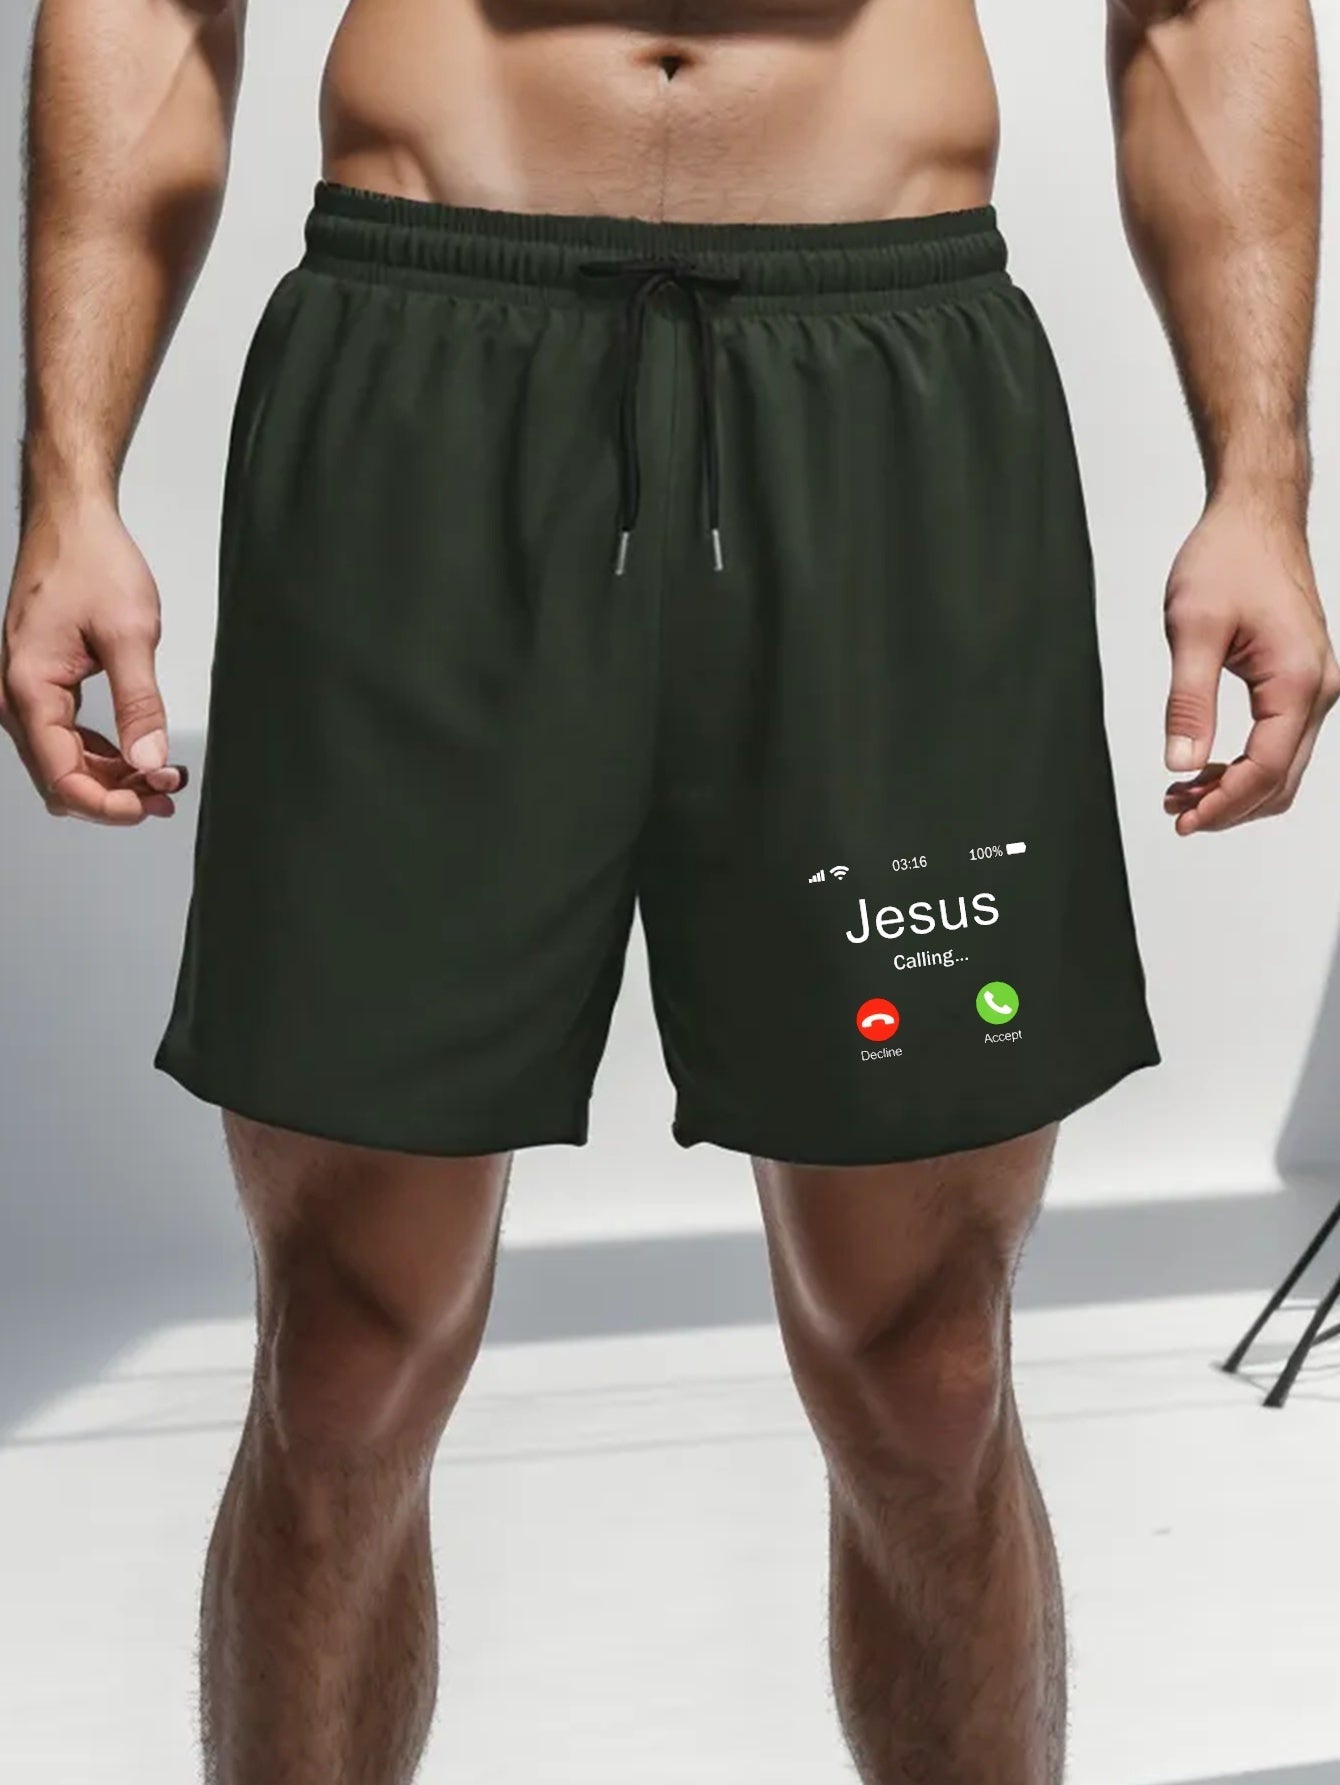 Jesus Is Calling Plus Size Men's Christian Shorts claimedbygoddesigns